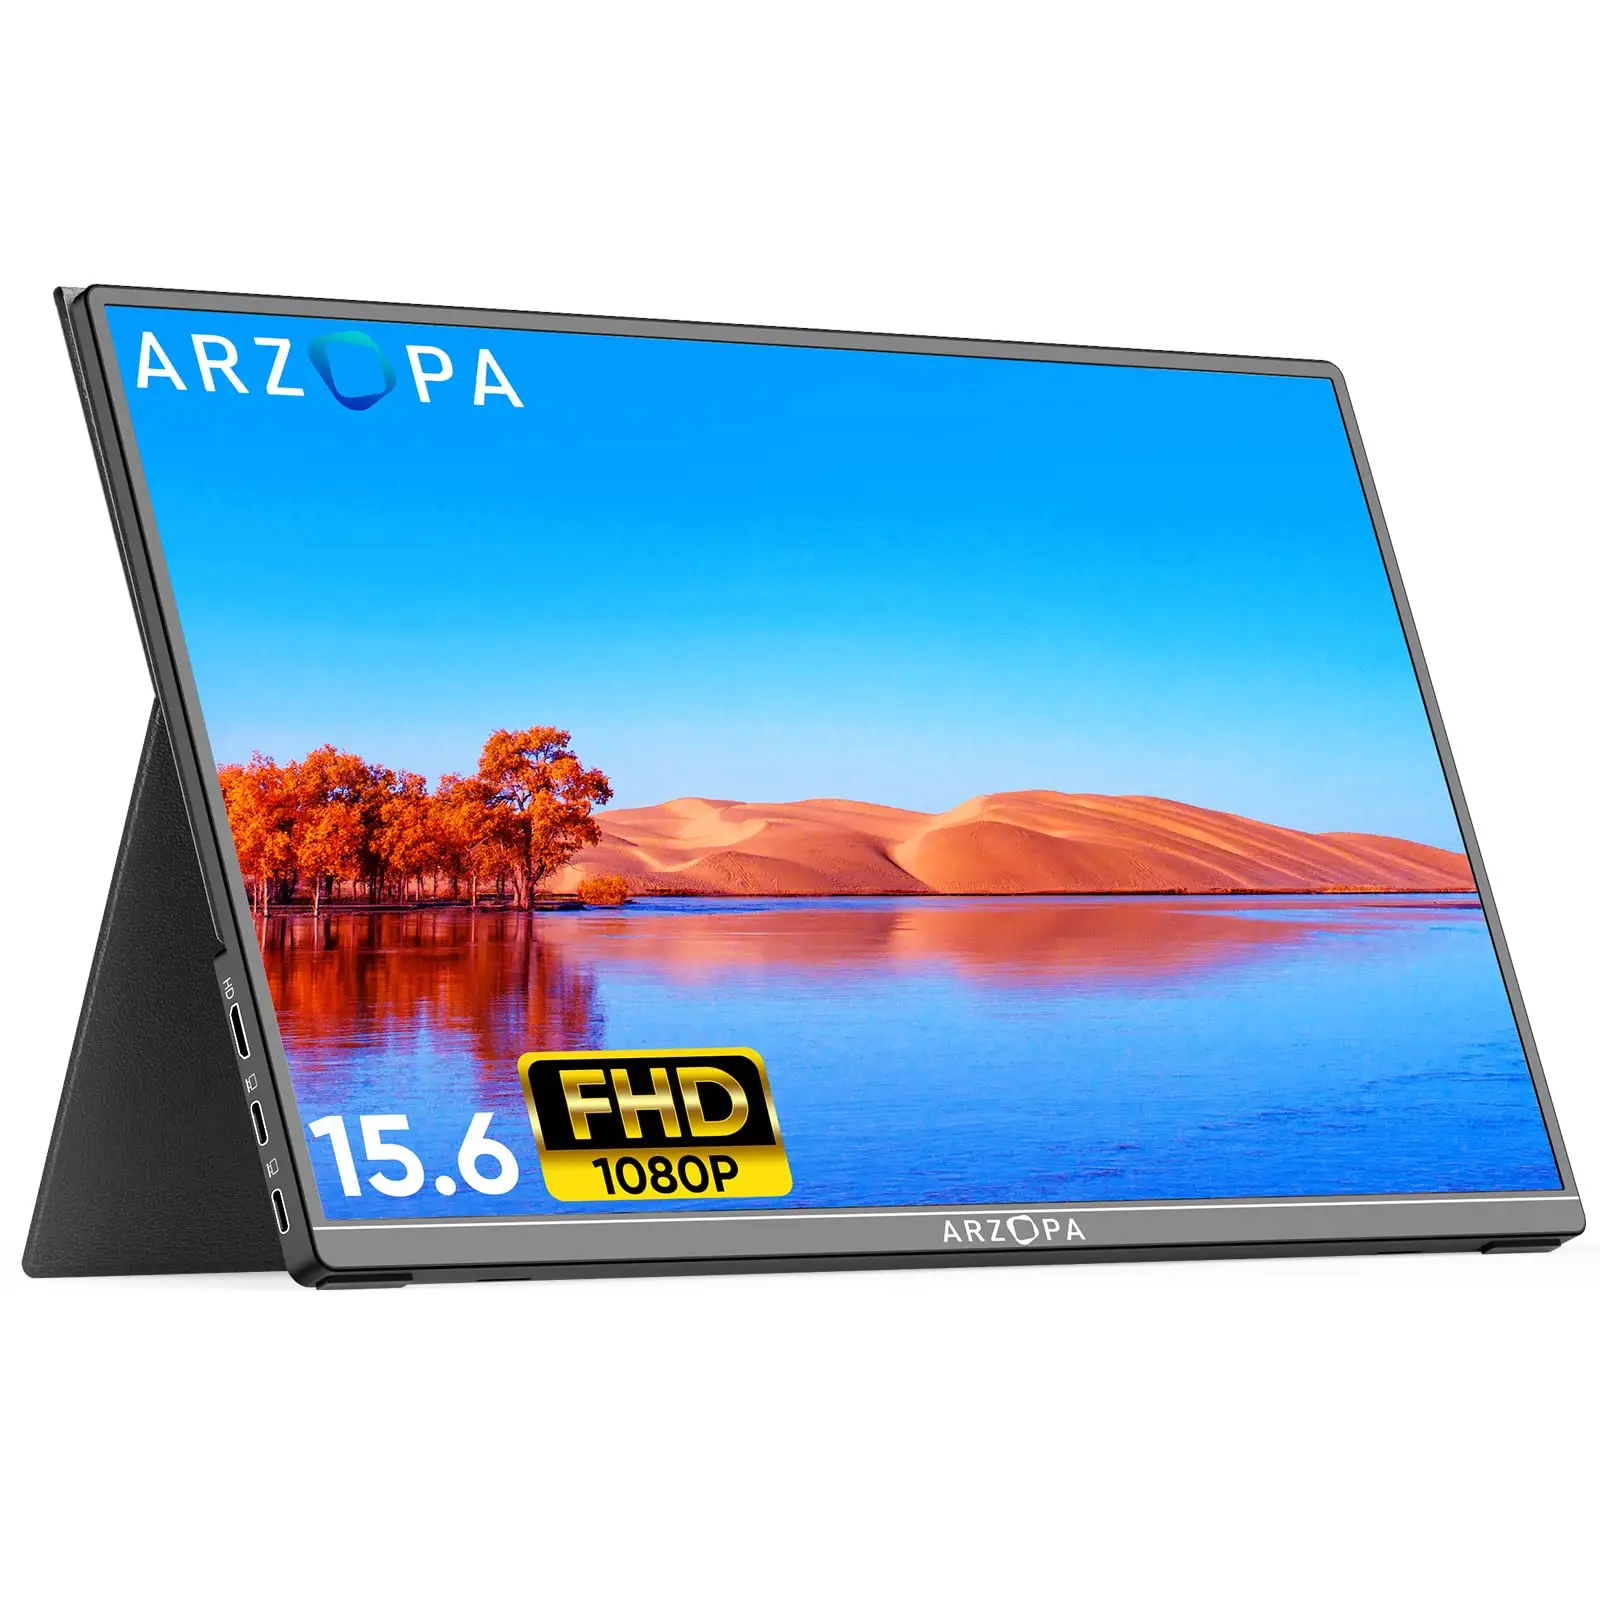 Arzopa 15.6นิ้ว1080P FHD Full HD GAMING USB แบบพกพา portatil จอภาพสำหรับแล็ปท็อปมือถือจอภาพแบบพกพา